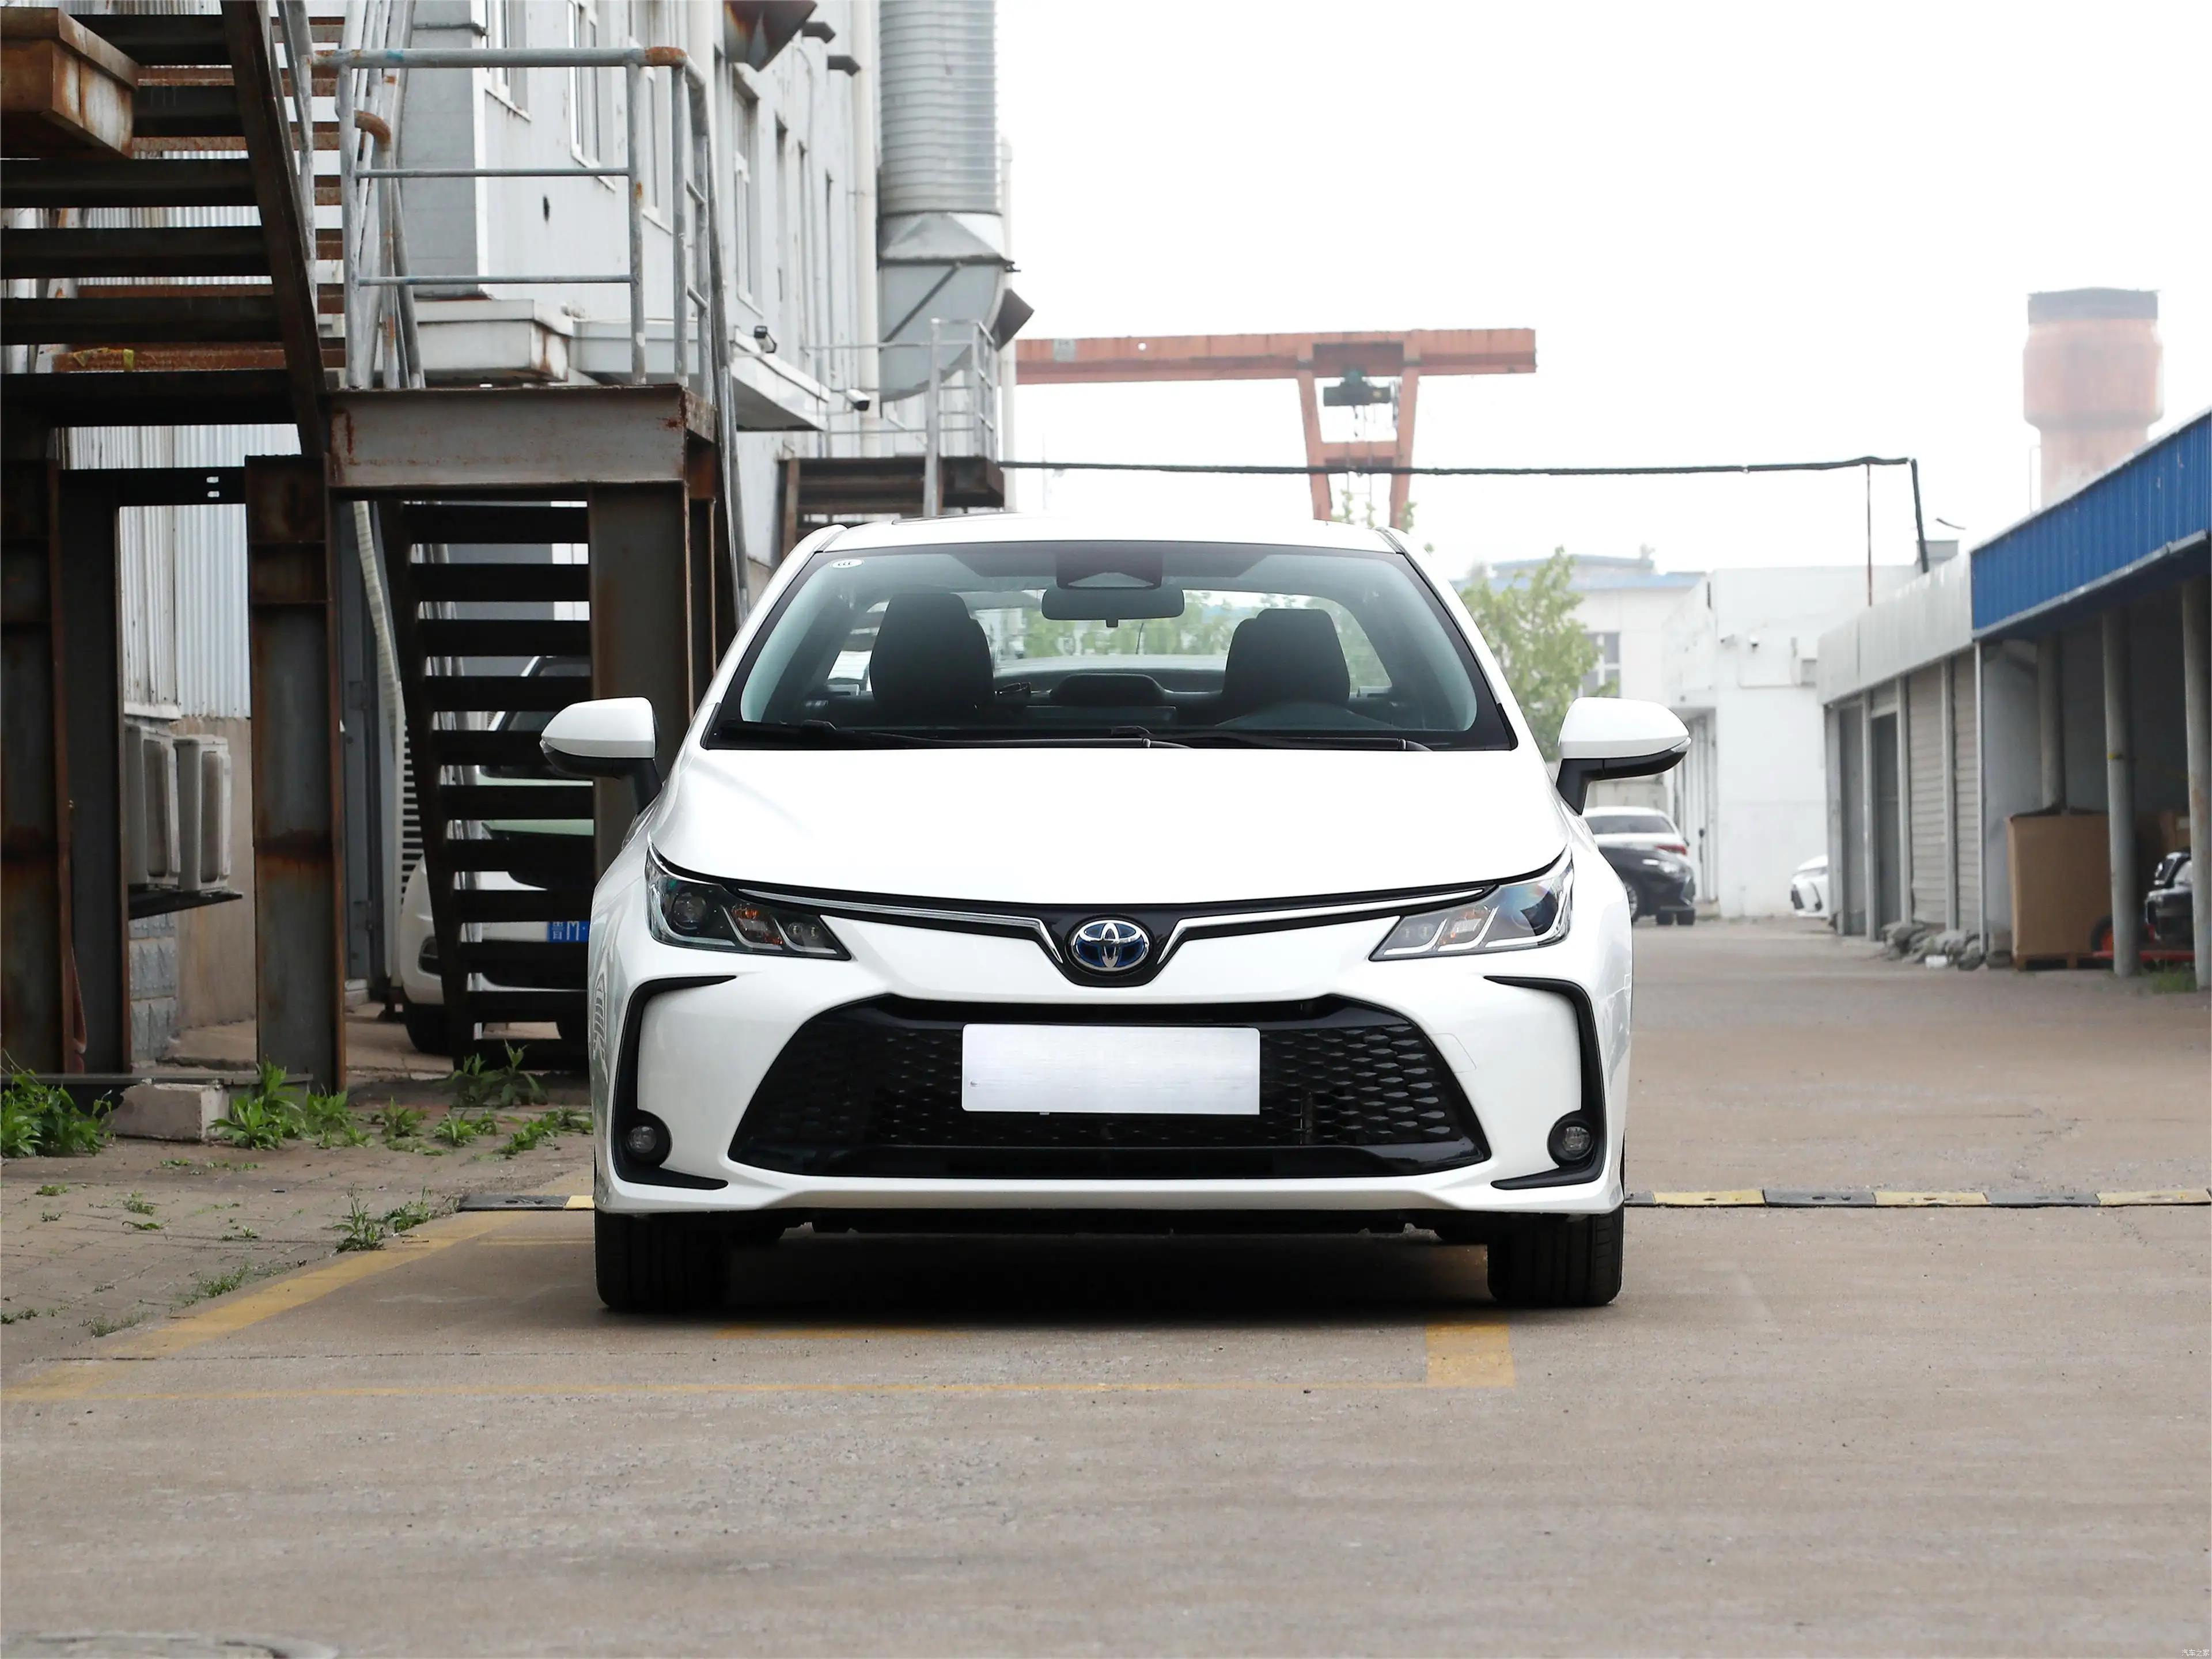 New Energy Hybrid Electric Vehicle 1.5L 1.8L 1.2T E-CVT Toyota Corolla Left Turn 2023 2022 2019 New Used Car